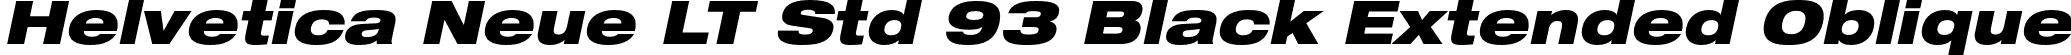 Helvetica Neue LT Std 93 Black Extended Oblique font - HelveticaNeueLTStd-BlkExO.otf